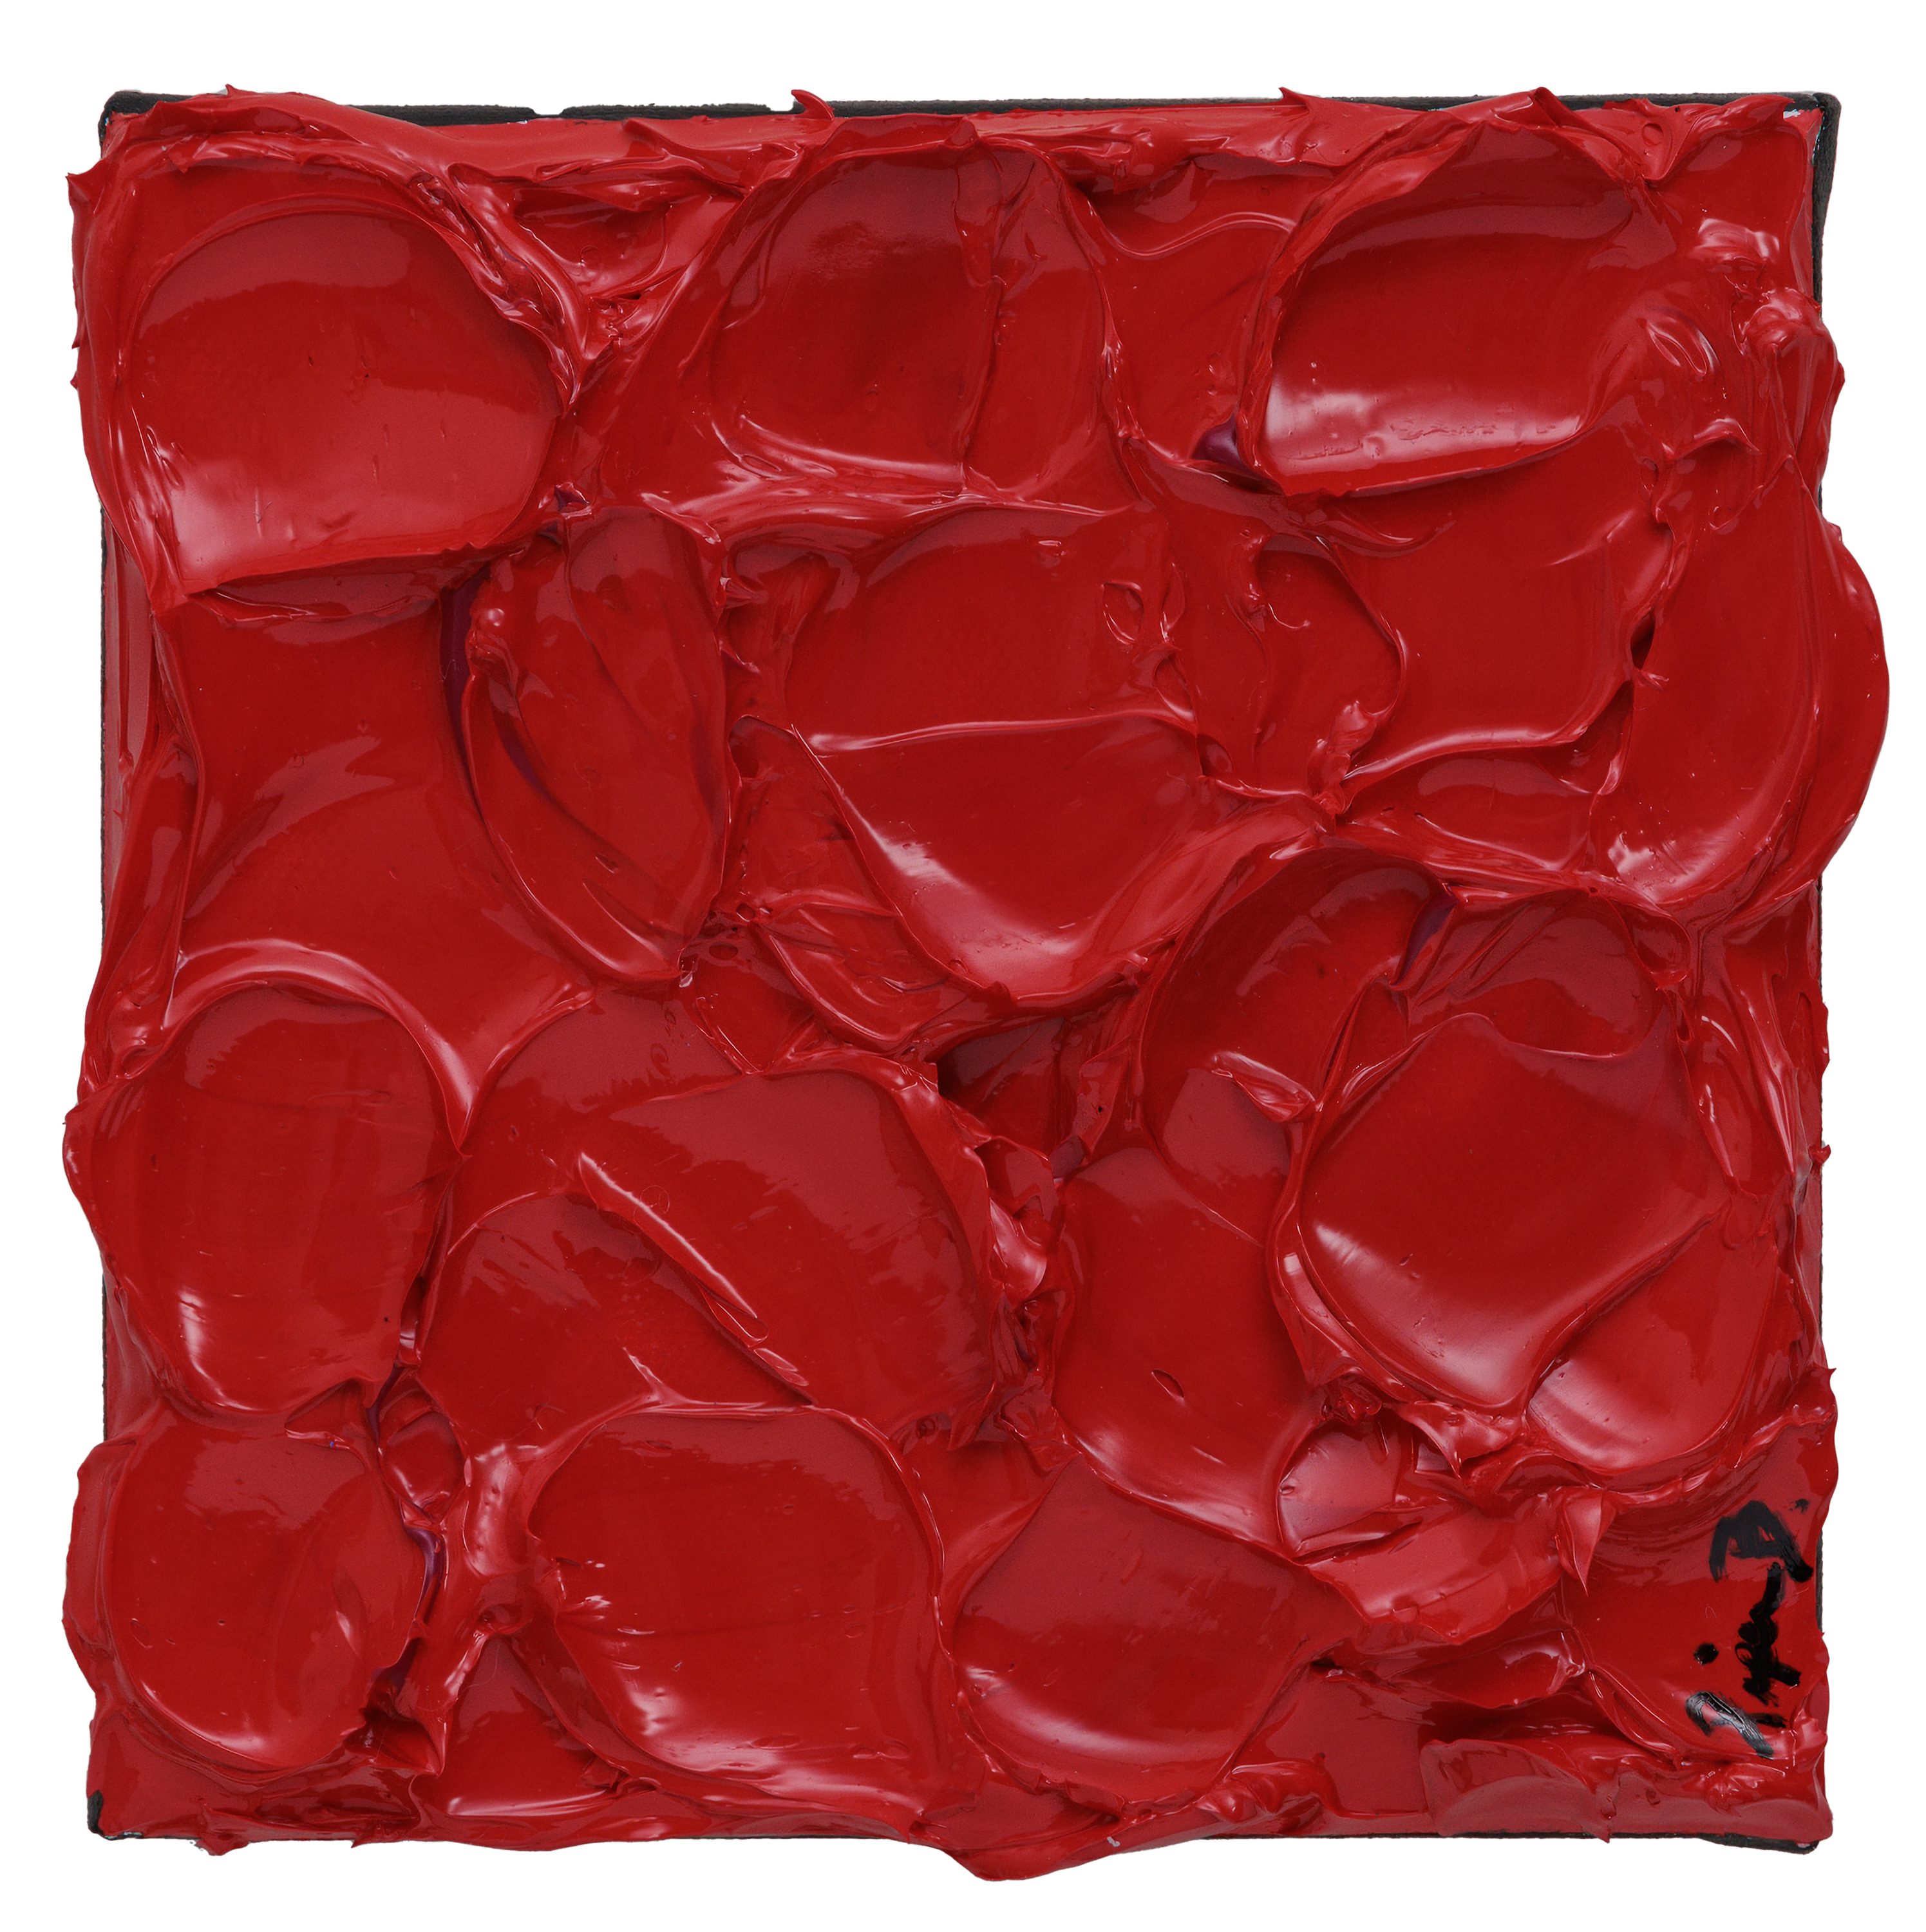 6x6 red block acrylic jh2yqi